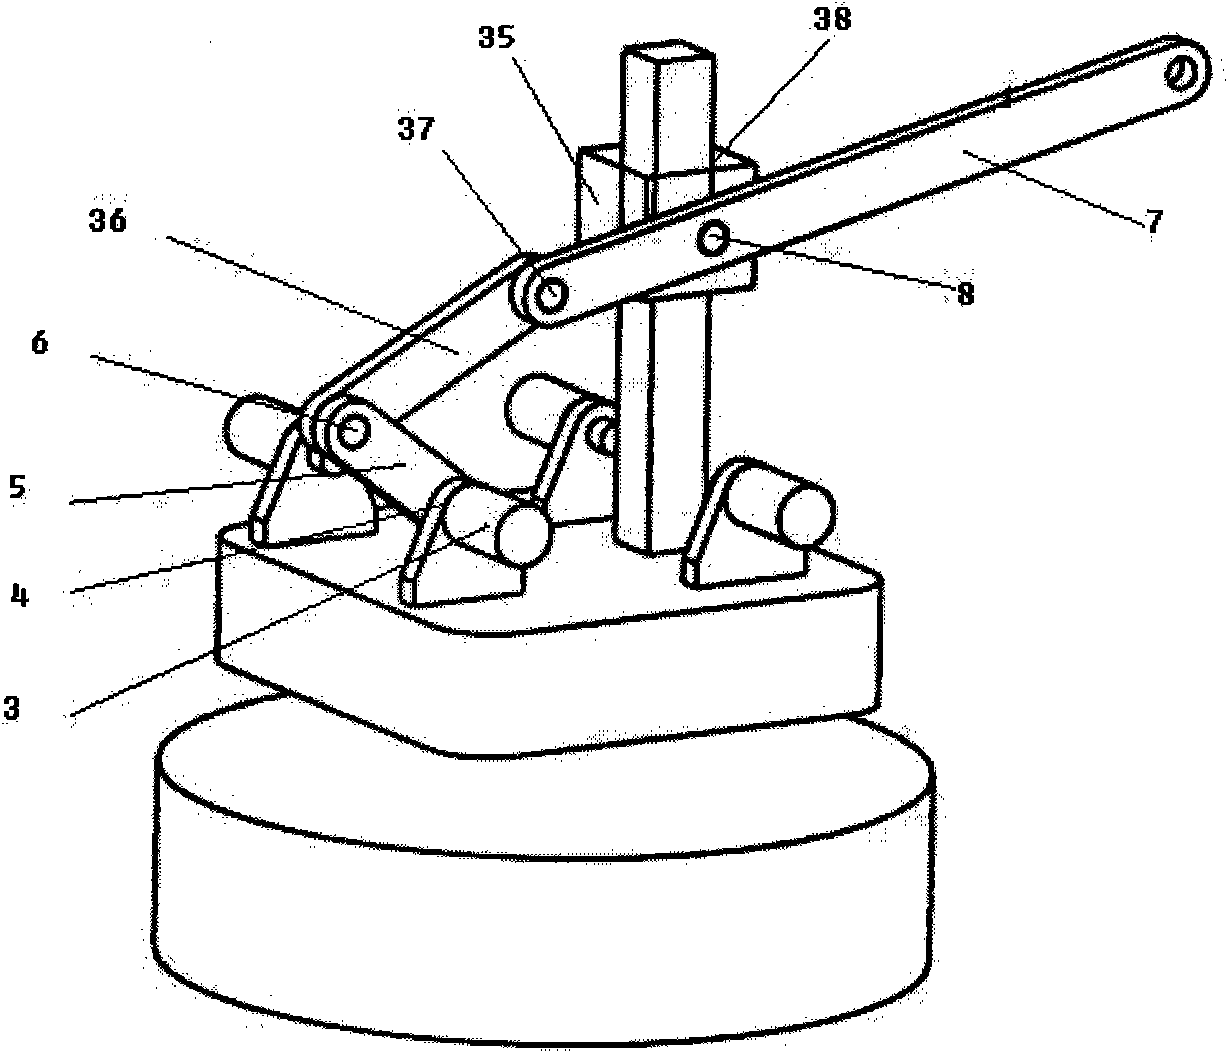 Simple spot-welding robot mechanism